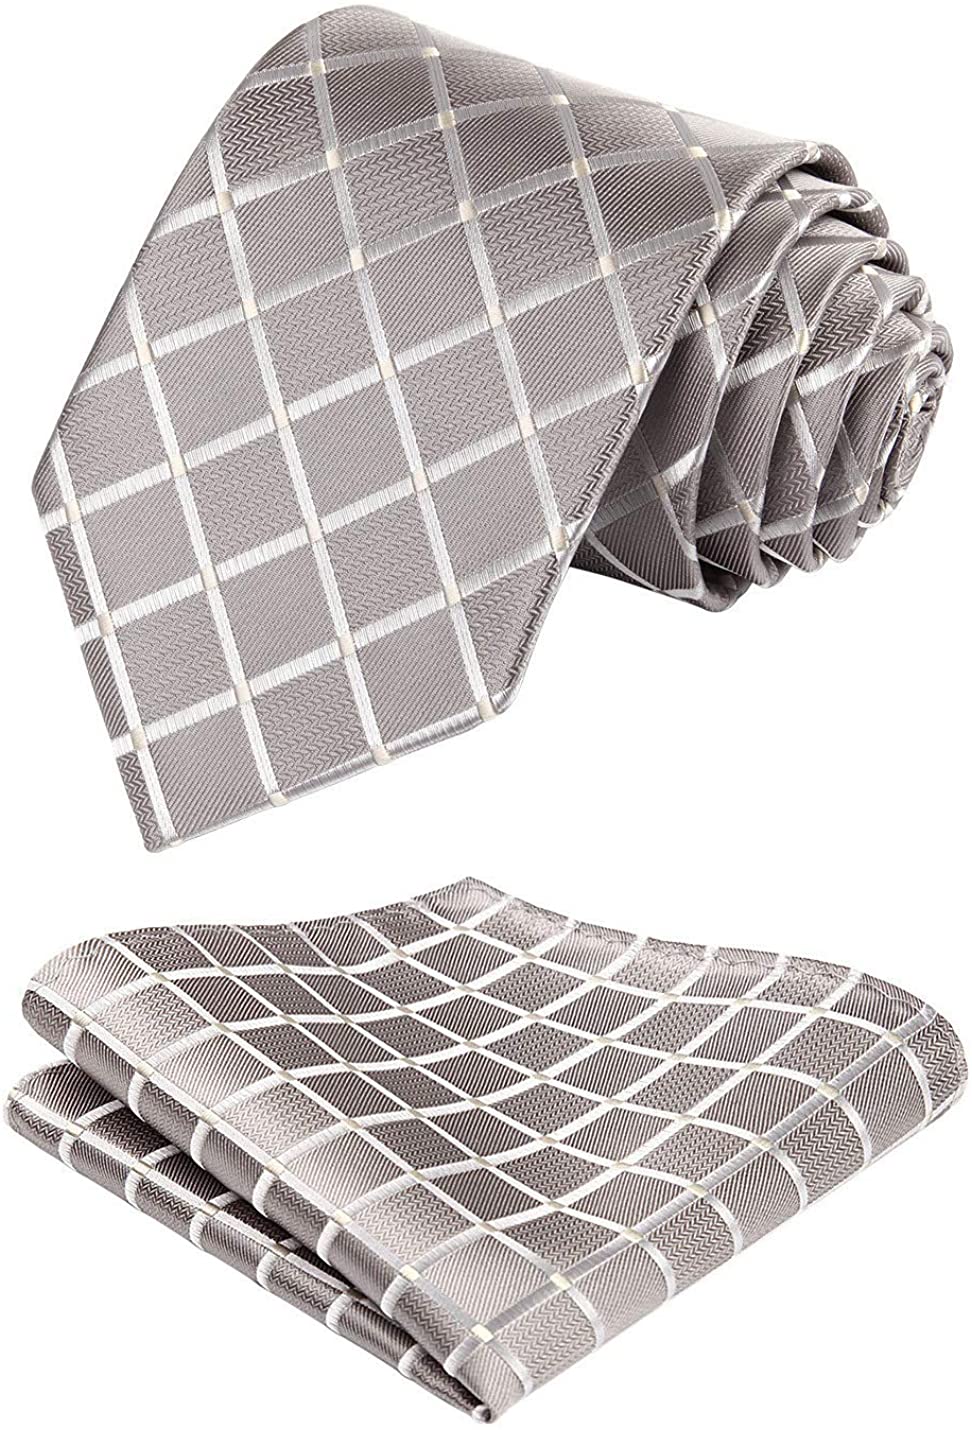 HISDERN Plaid Tie Handkerchief Woven Classic Stripe Mens Necktie & Pocket Square Set 